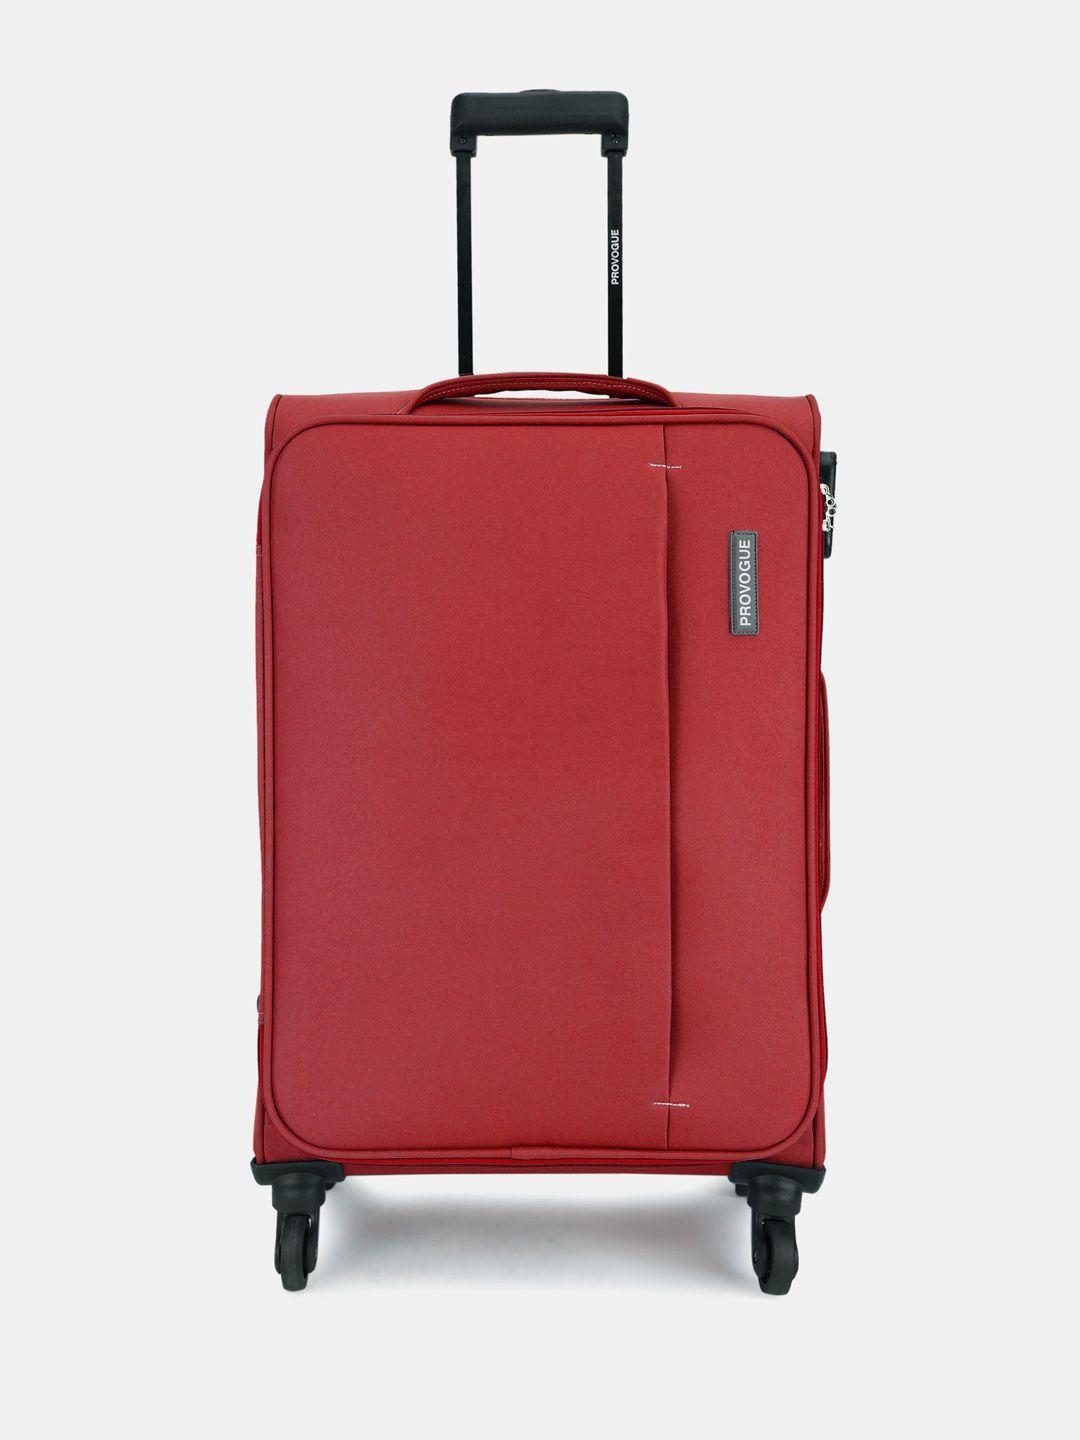 provogue edge medium soft trolley suitcase - 65 cm